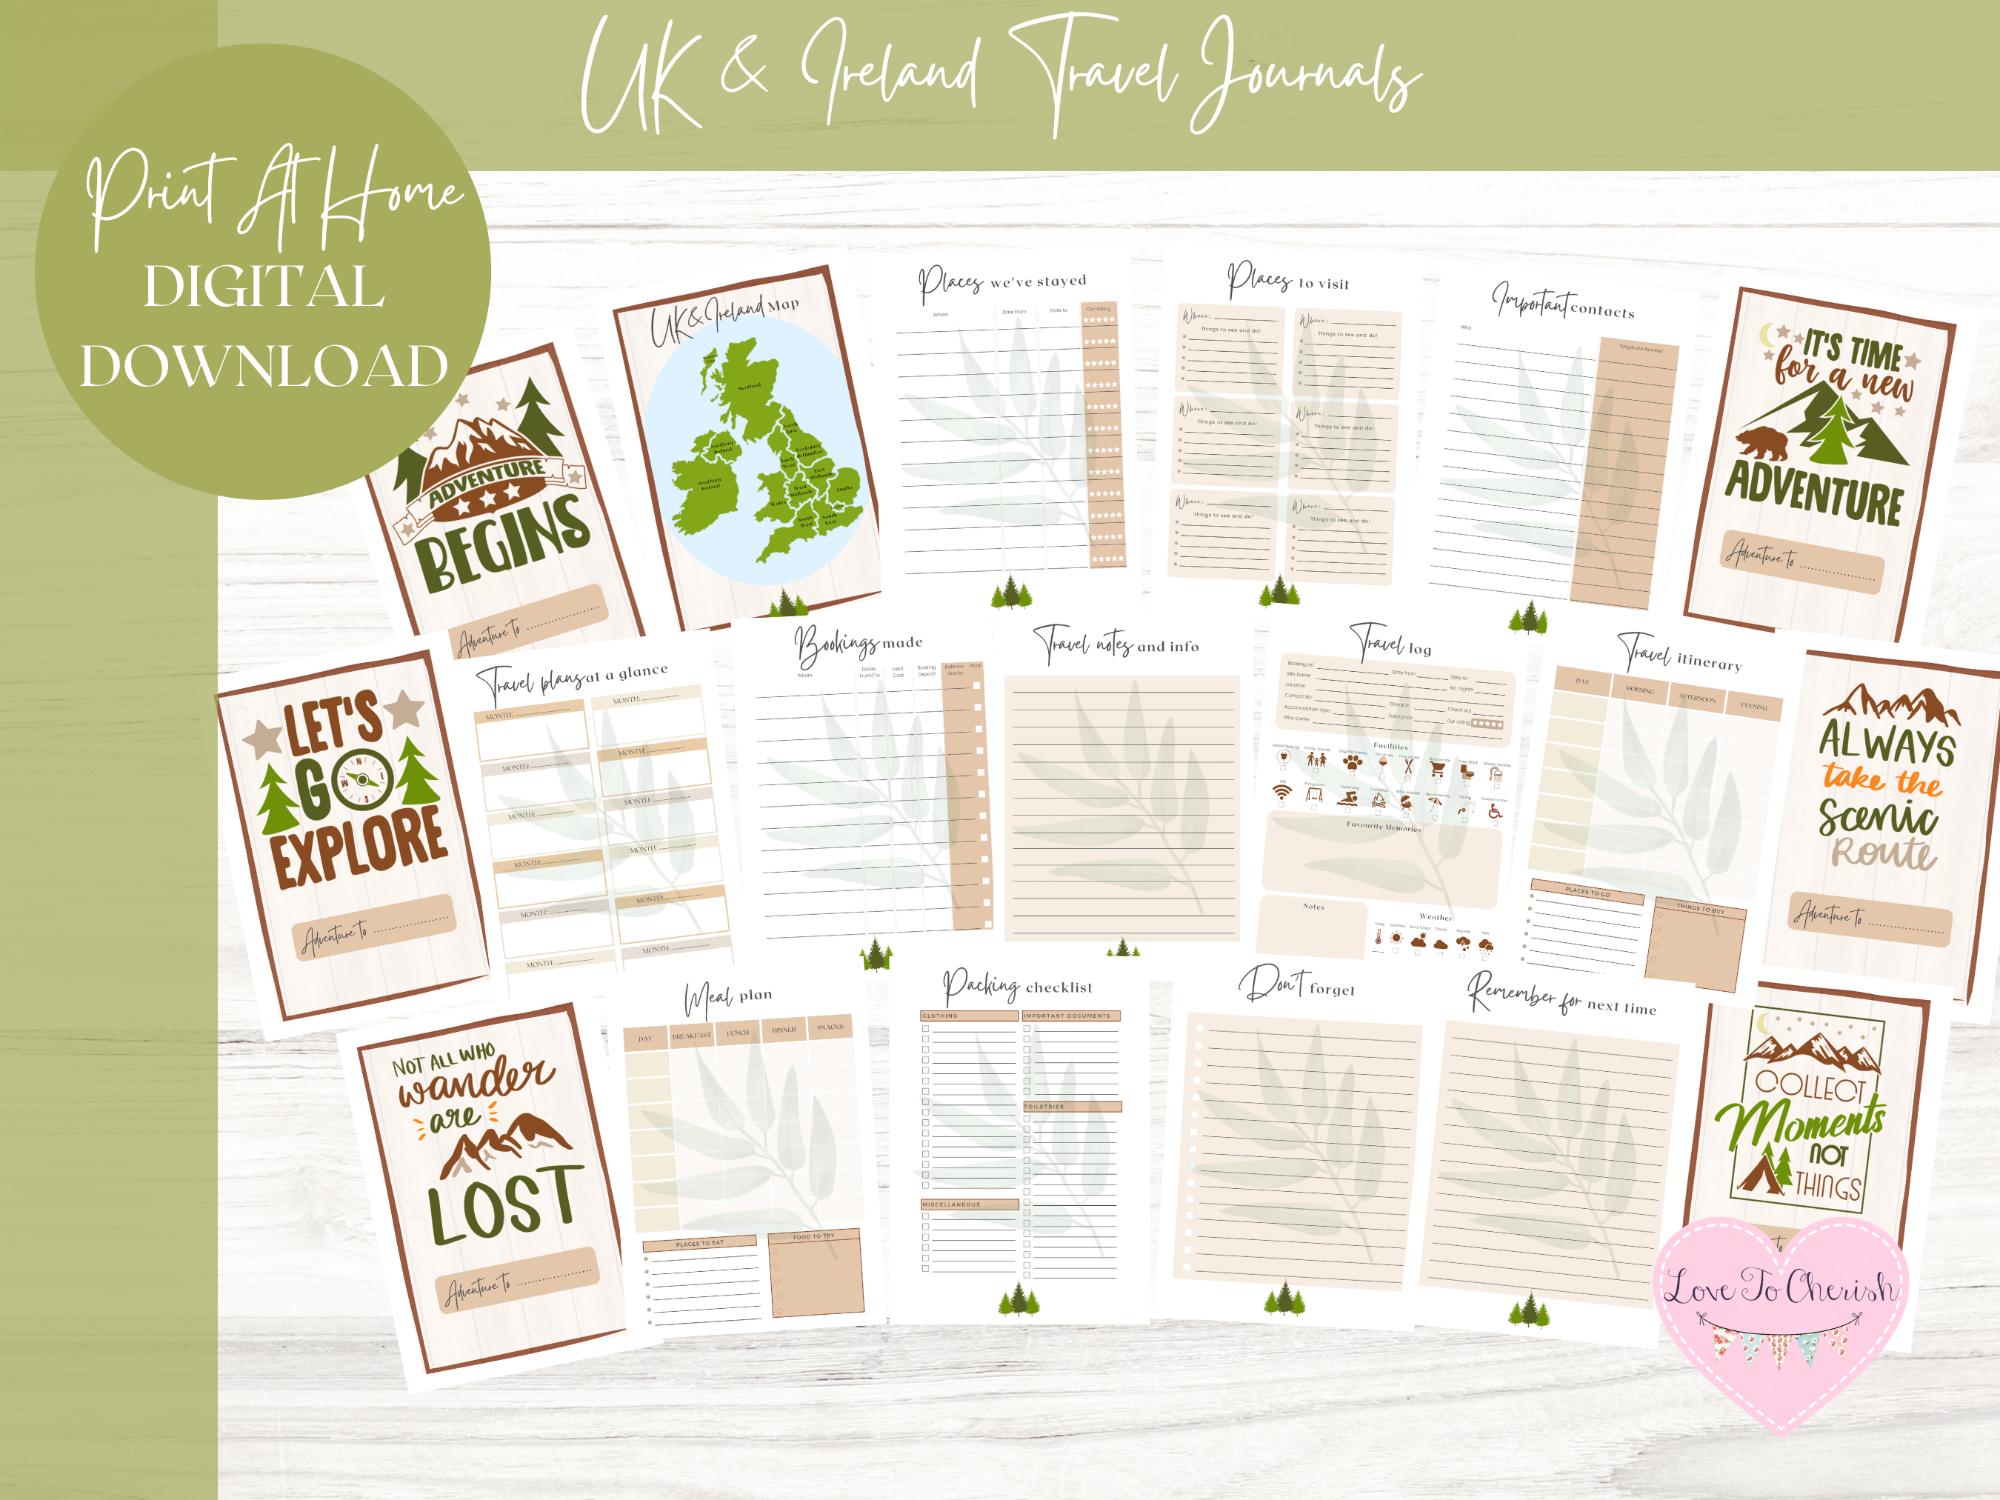 UK & Ireland Travel Journal - Digital Version